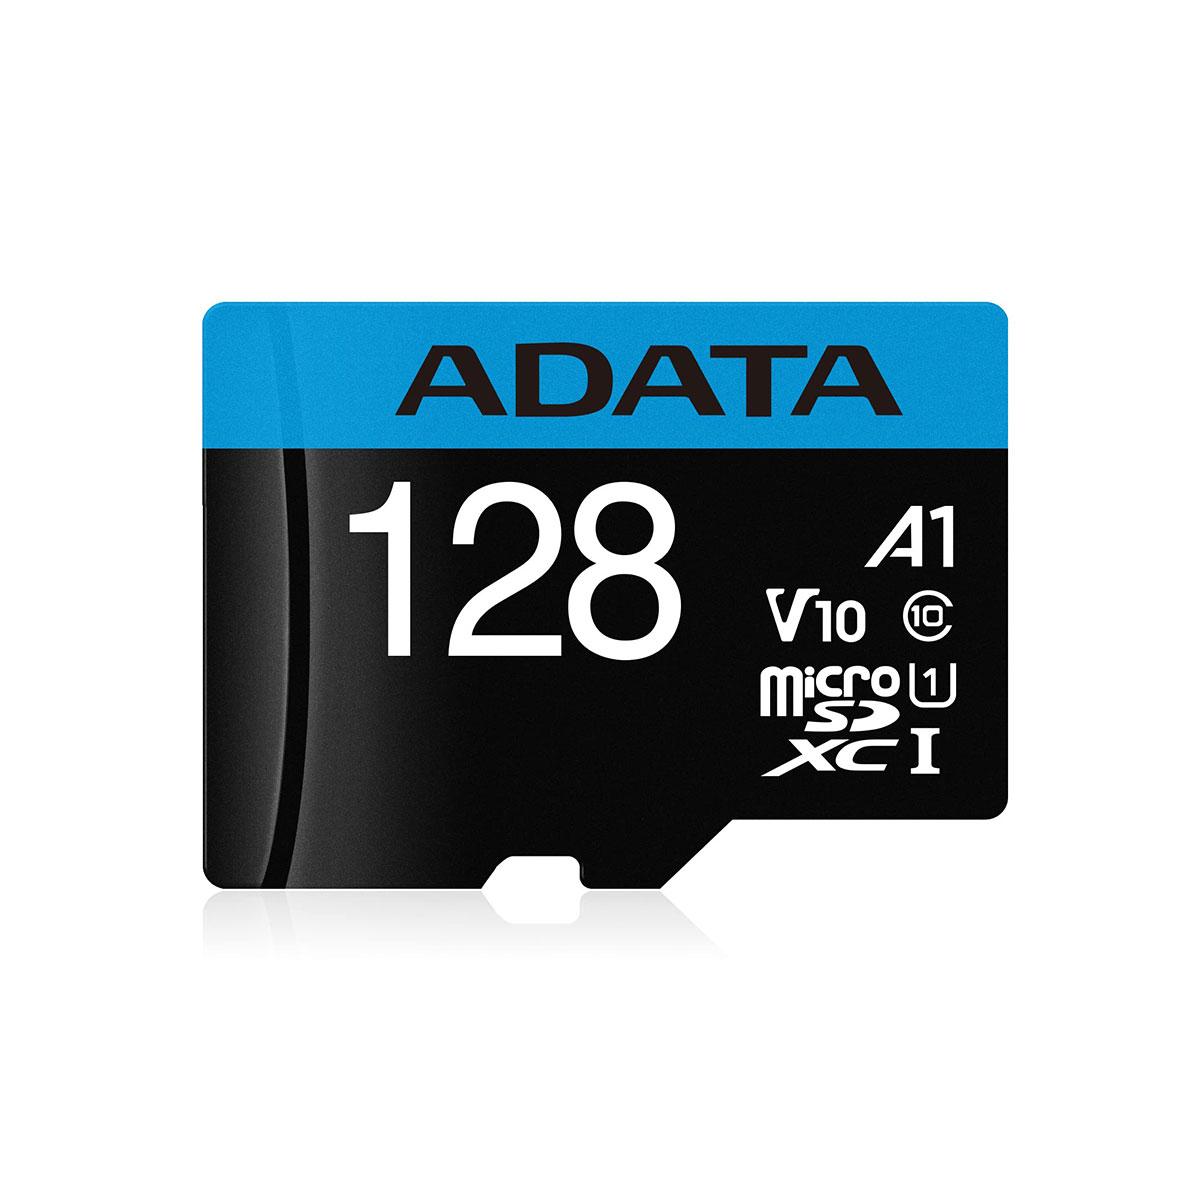 ADATA-Micro-SDXC-UHS-I-v10-128GB